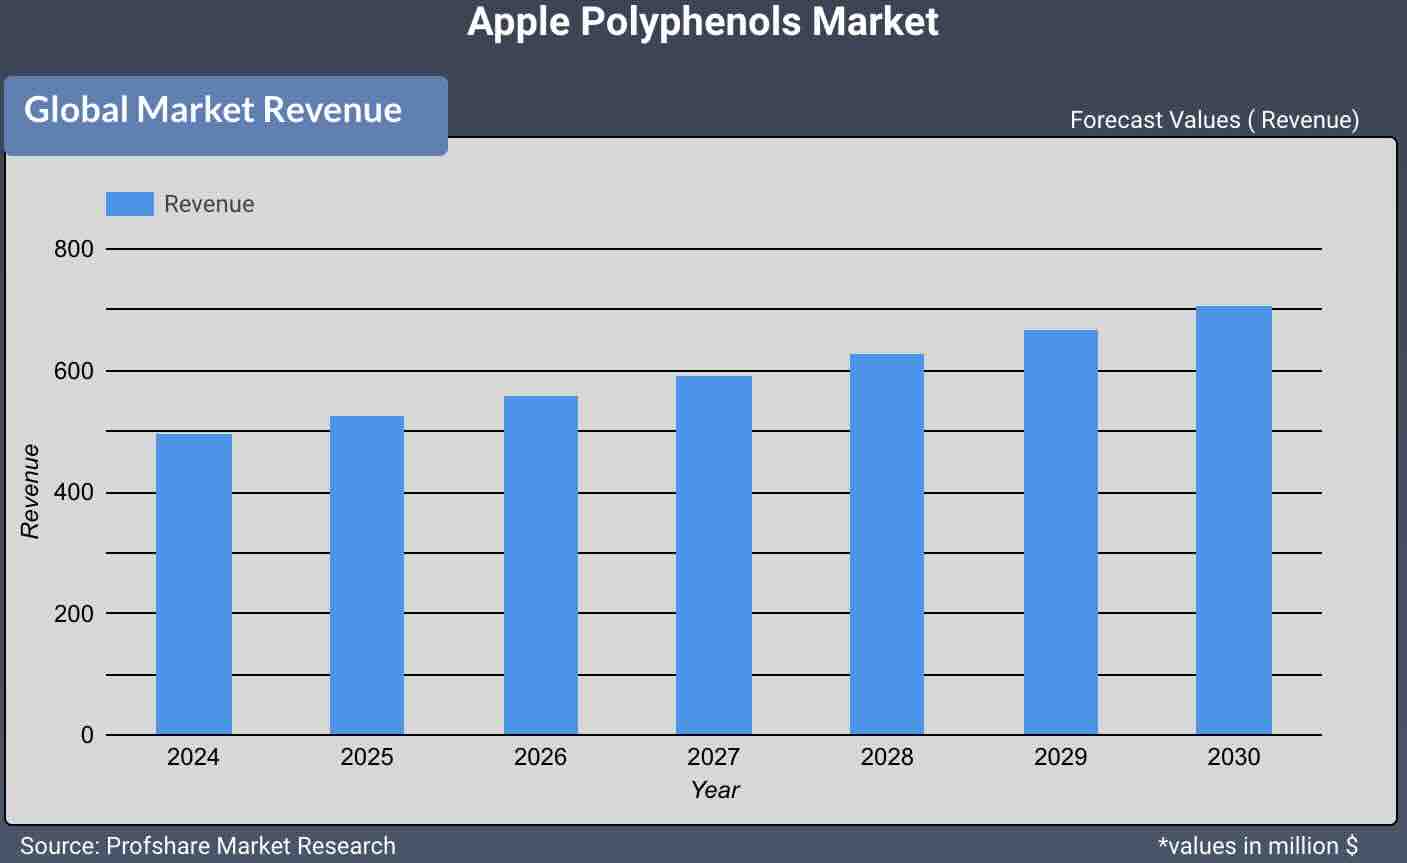 Apple Polyphenols Market